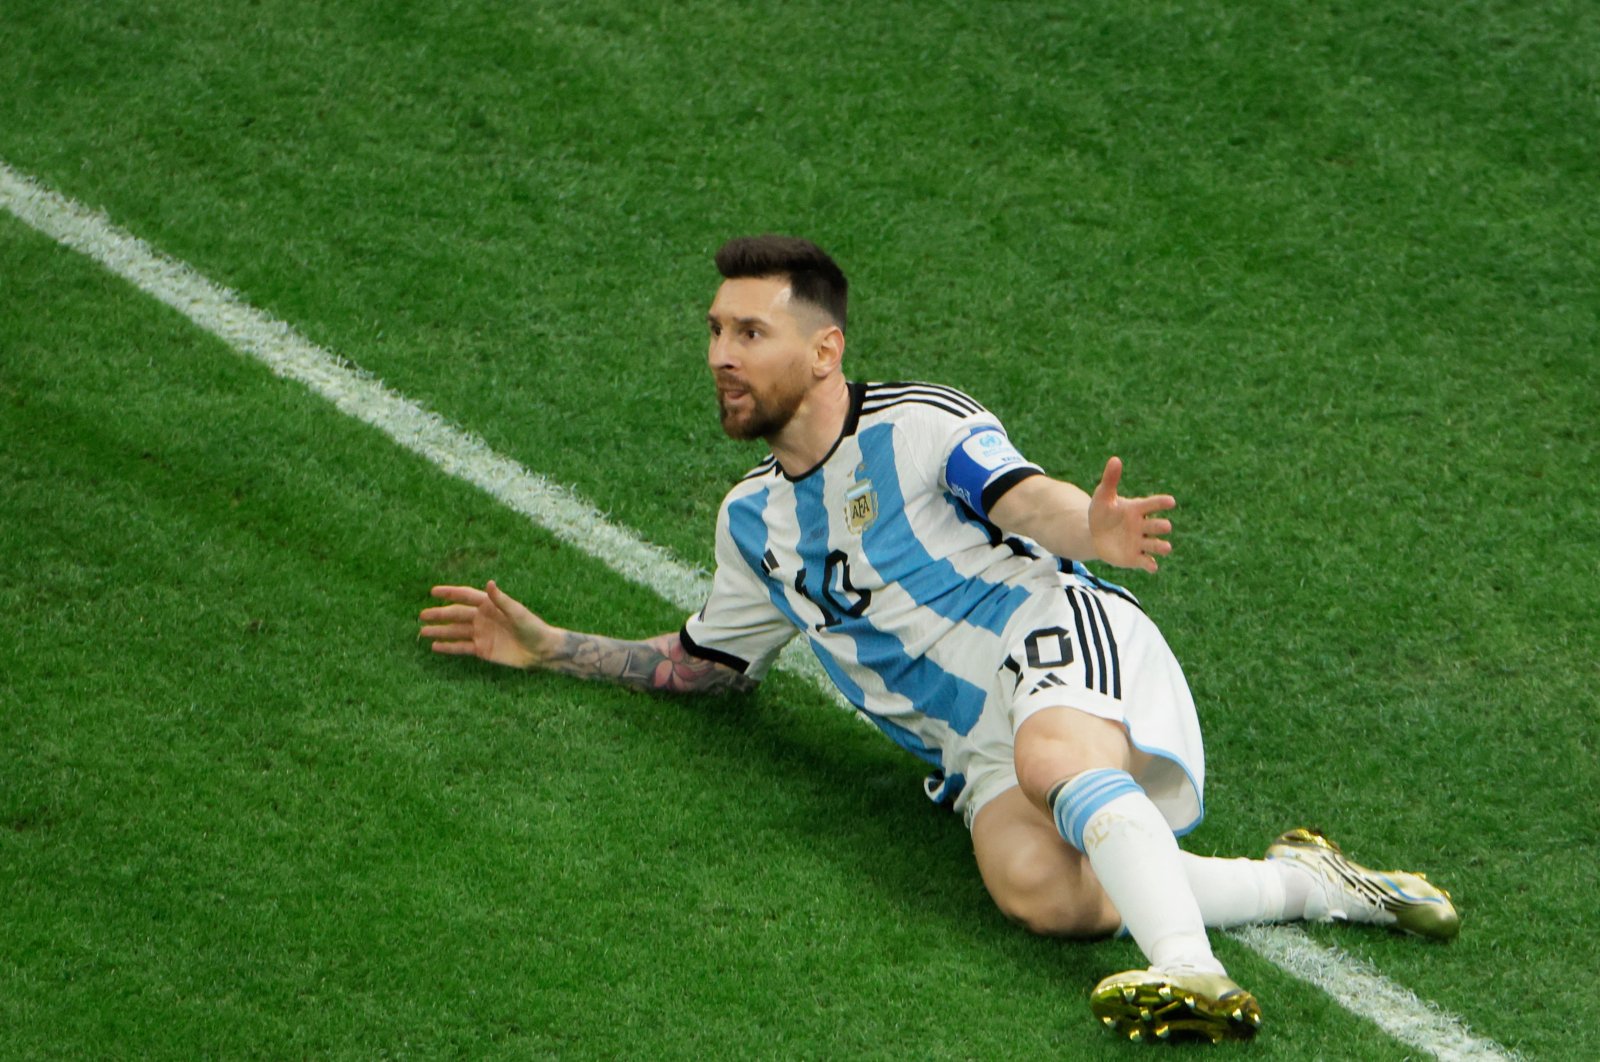 Ini dia: Messi bersama Argentina mengakhiri penantian 36 tahun gelar Piala Dunia